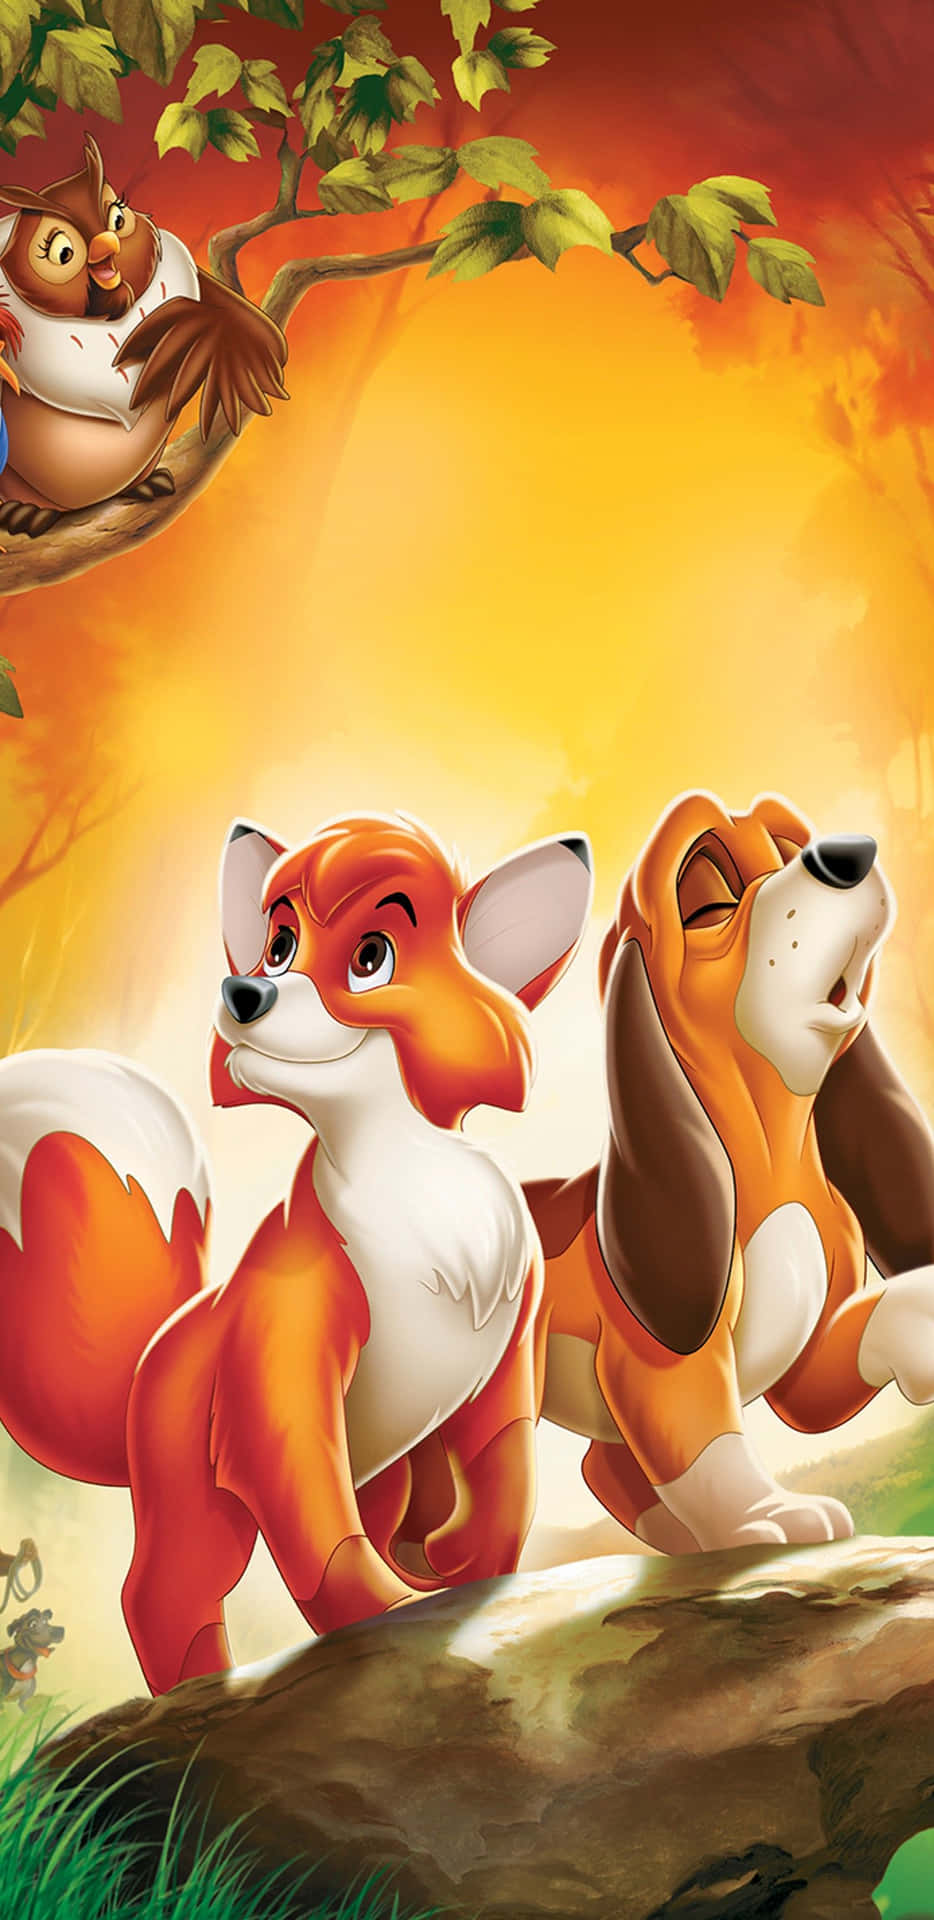 Fox And Hound - A Timeless Friendship